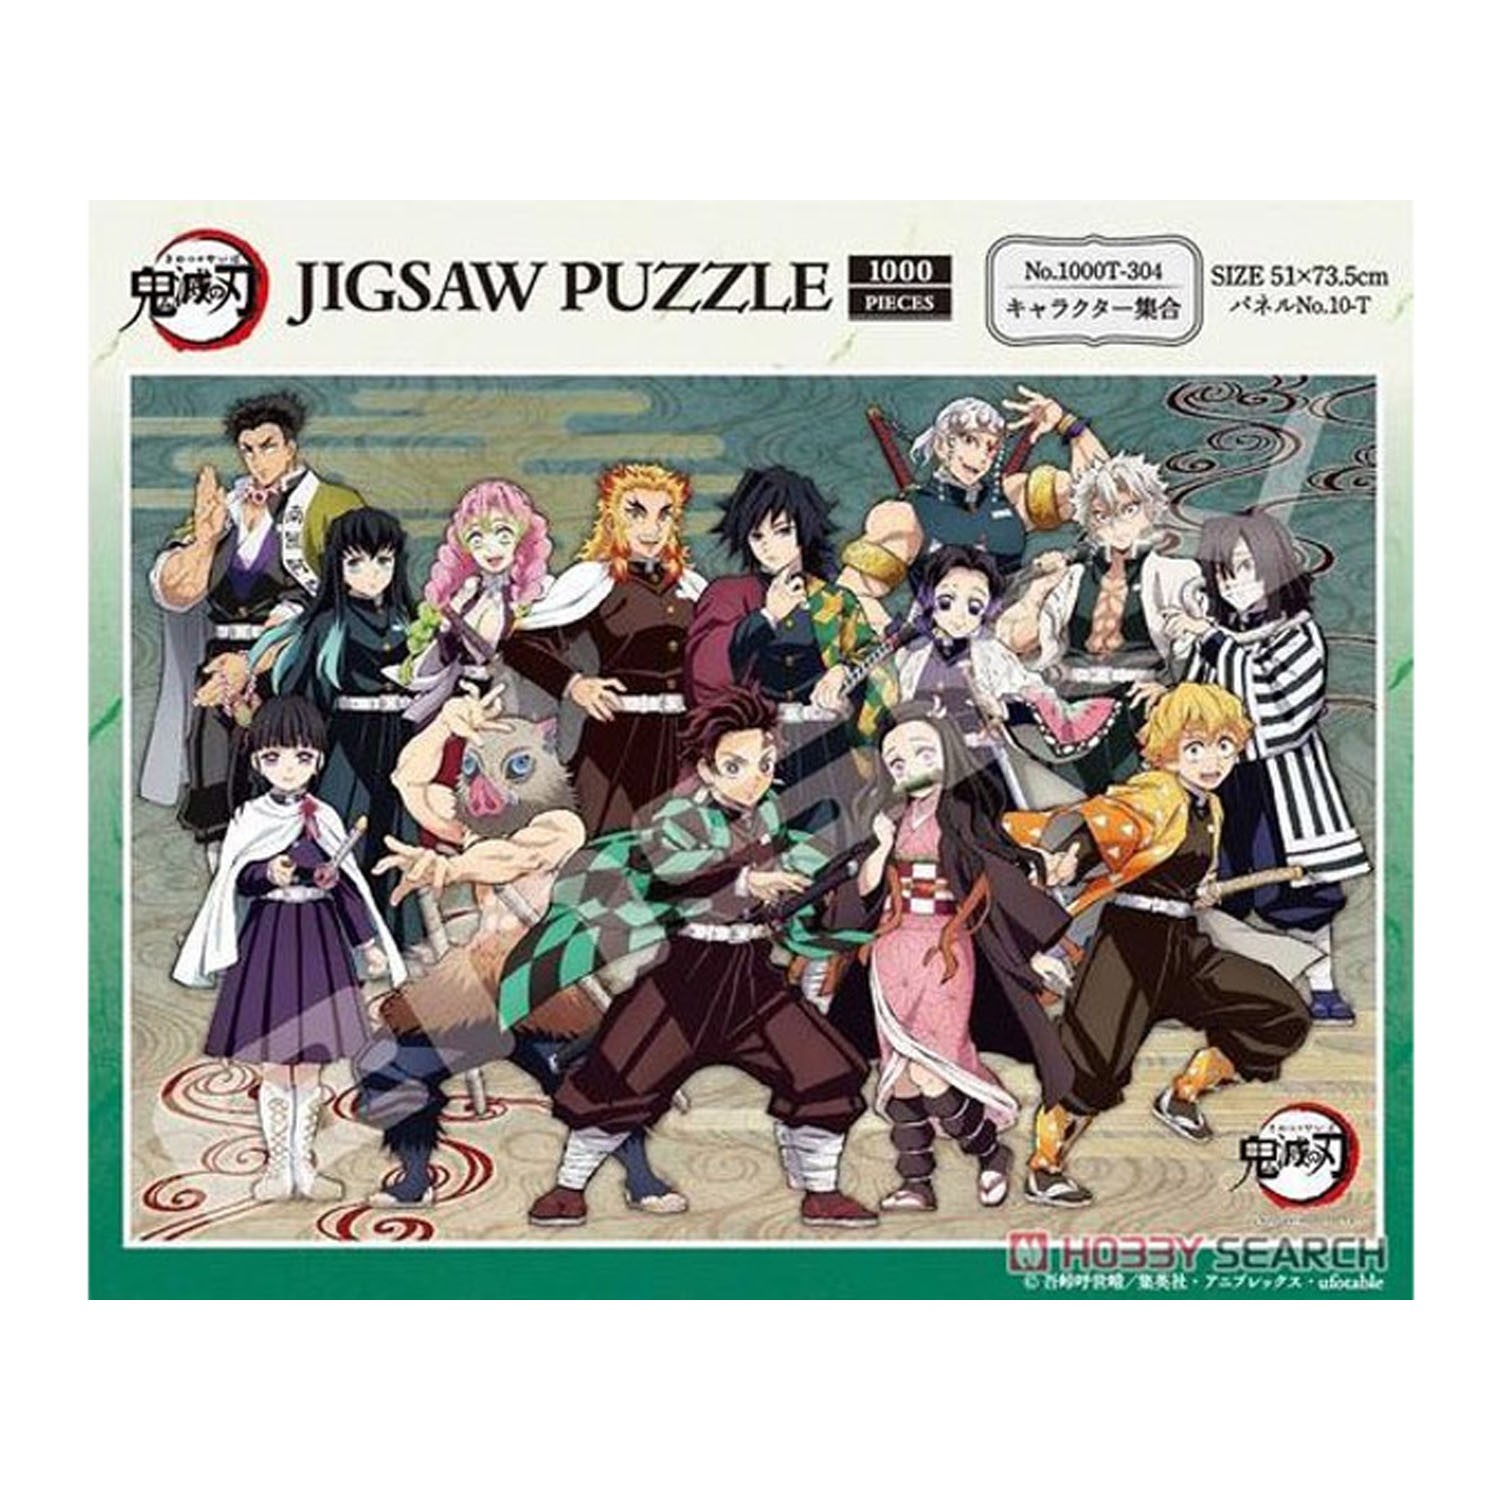 1000T Piece Jigsaw Puzzle Dragon Ball Z Battle! (51x73.5cm)